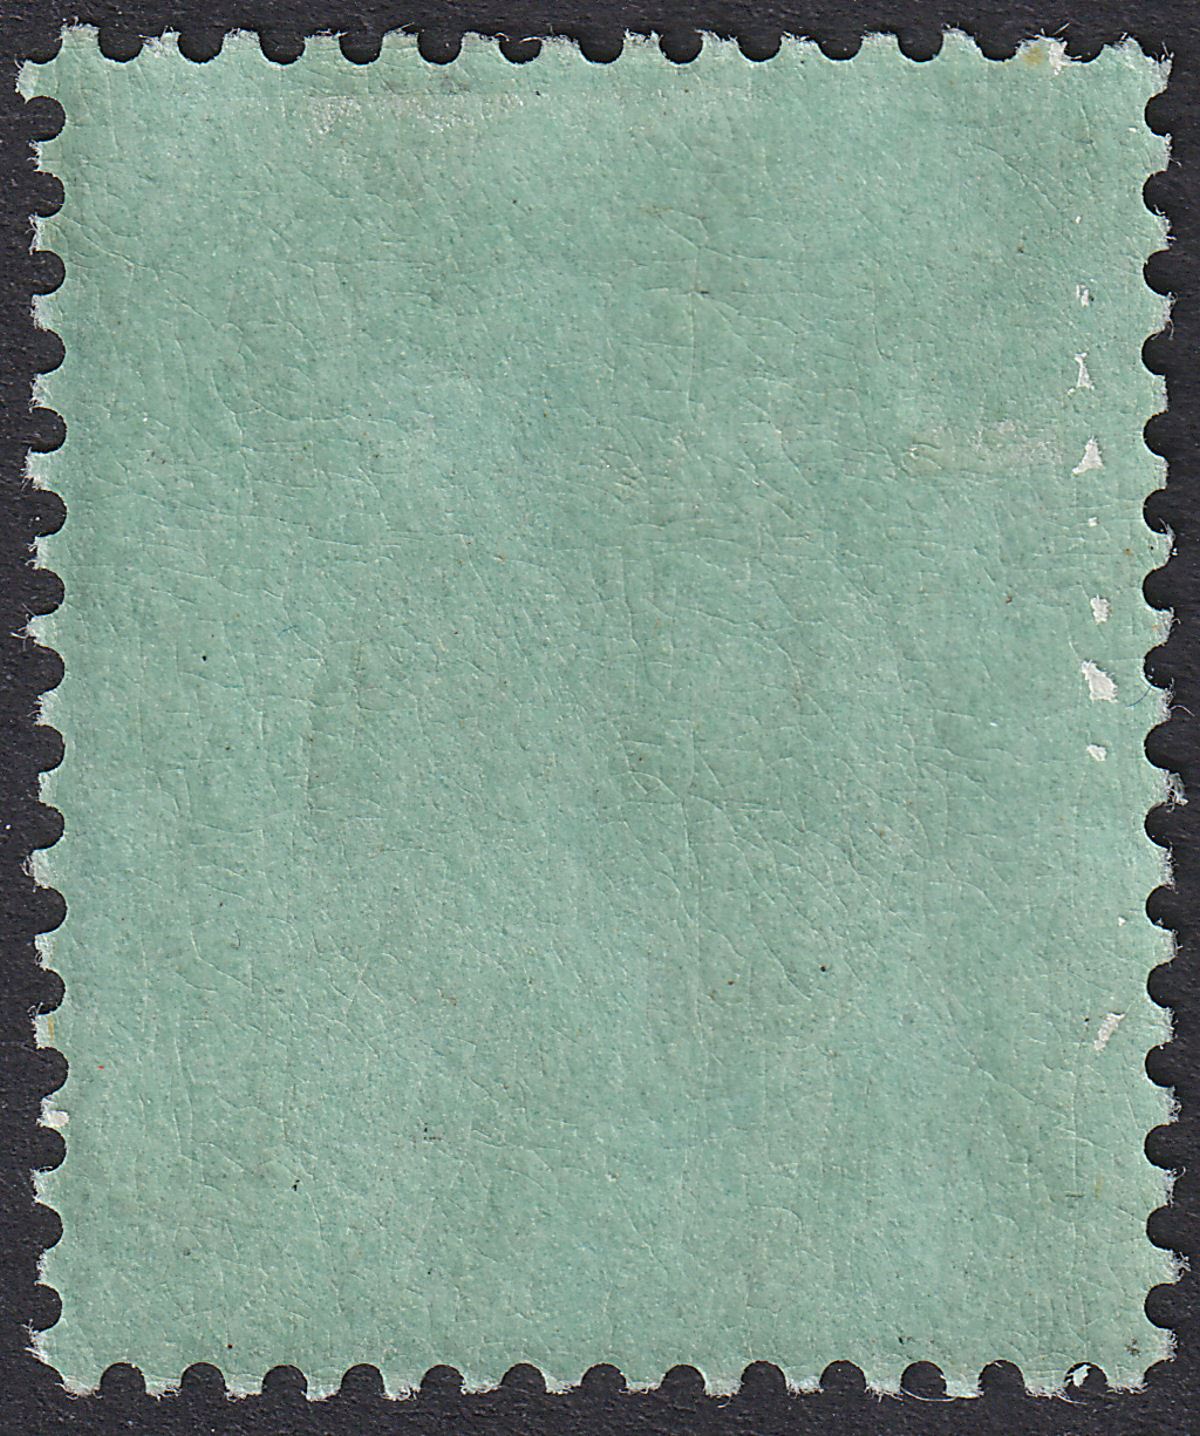 Hong Kong 1911 KEVII 50c Black on Green Mint SG98 cat £50 surface mark